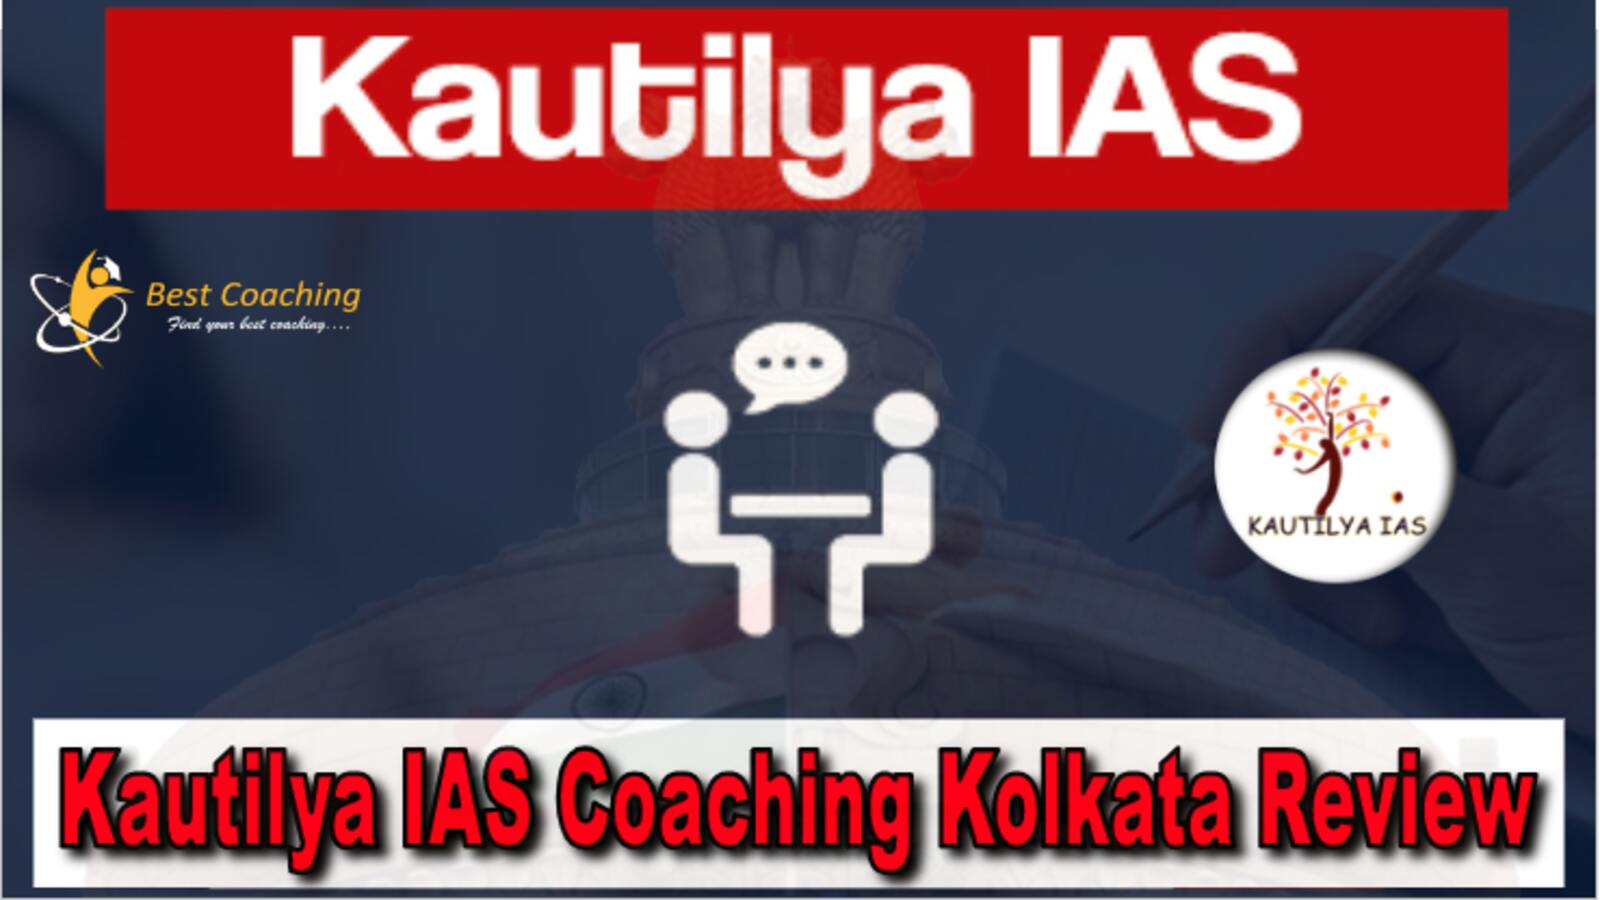 Kautilya IAS Coaching Kolkata Review